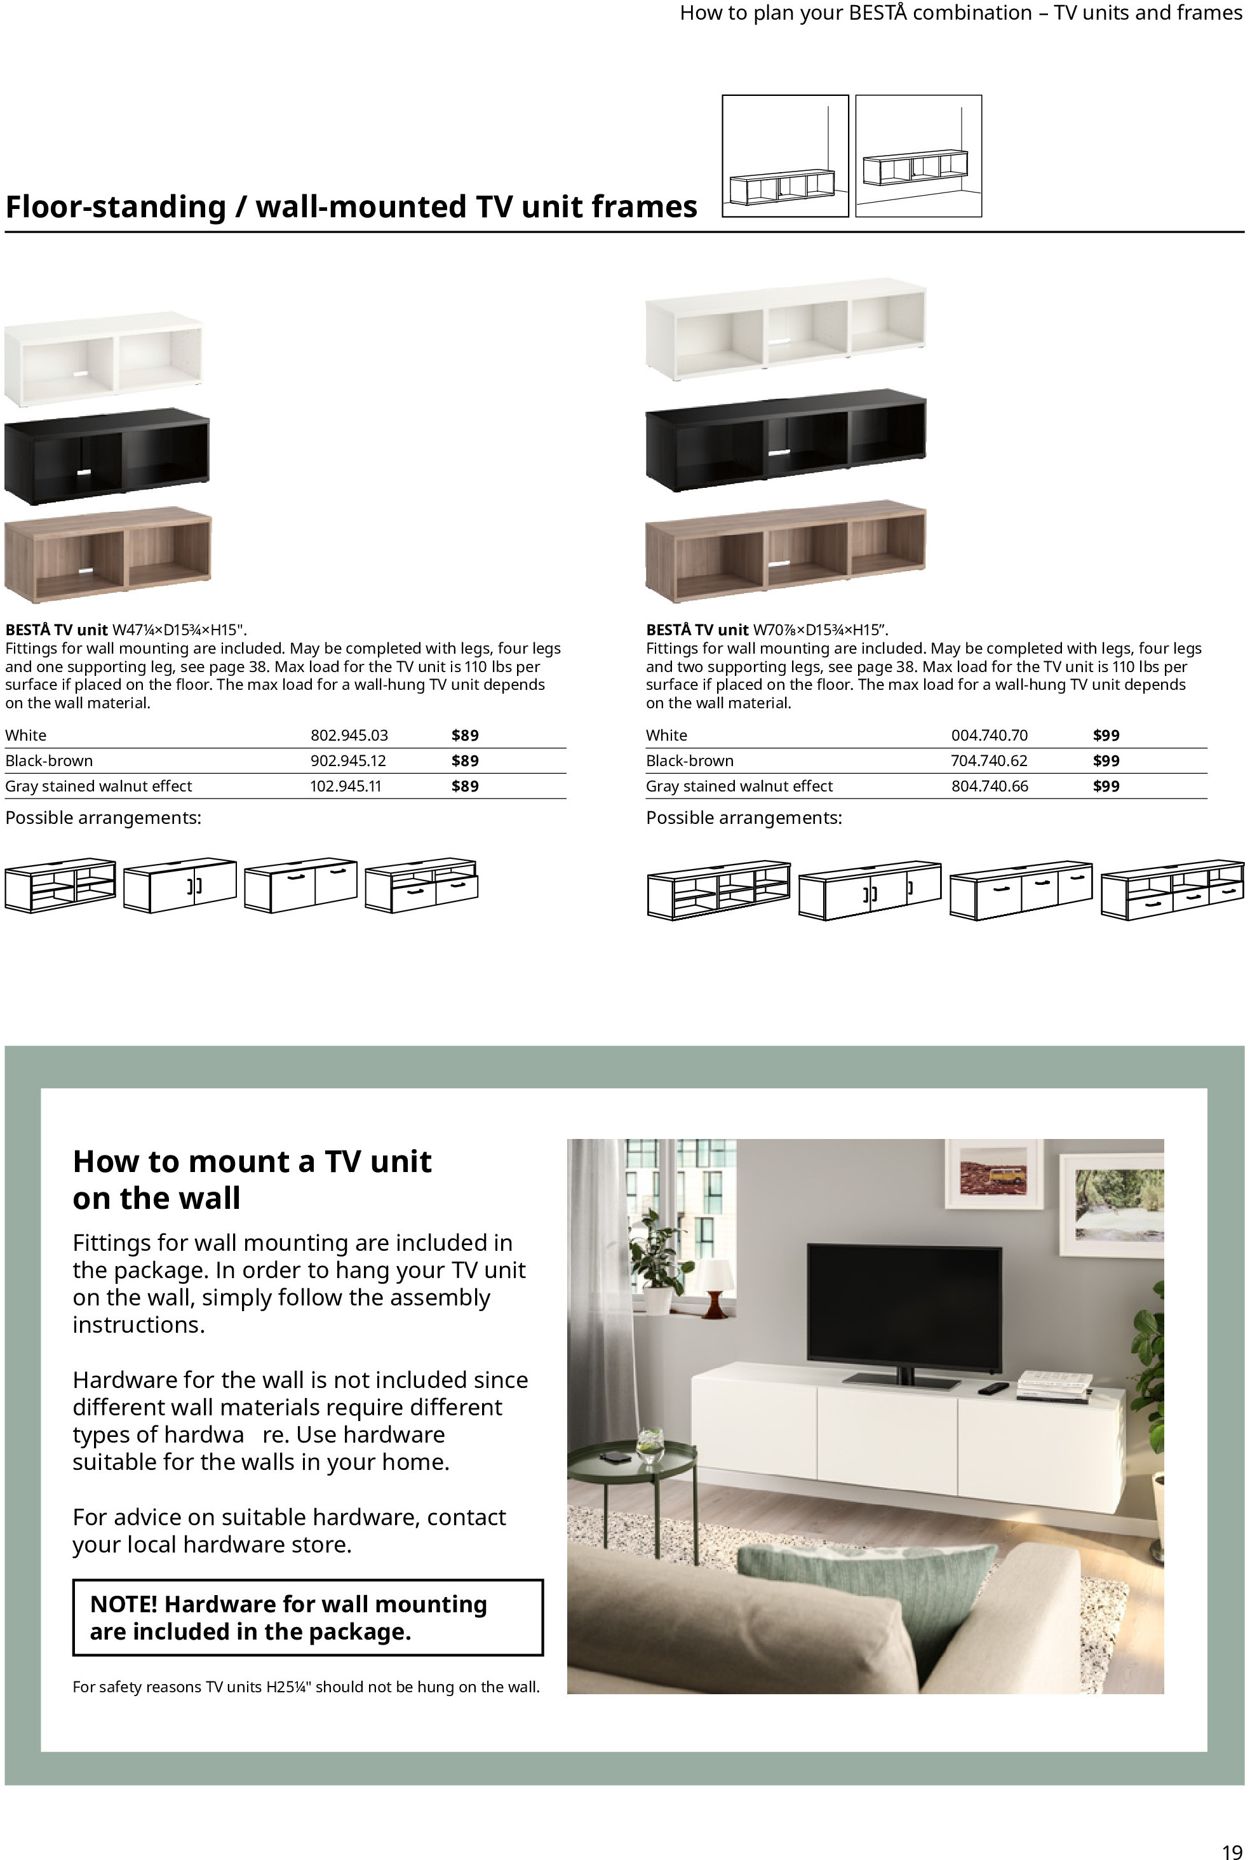 Catalogue IKEA Storage 2021 from 01/27/2021